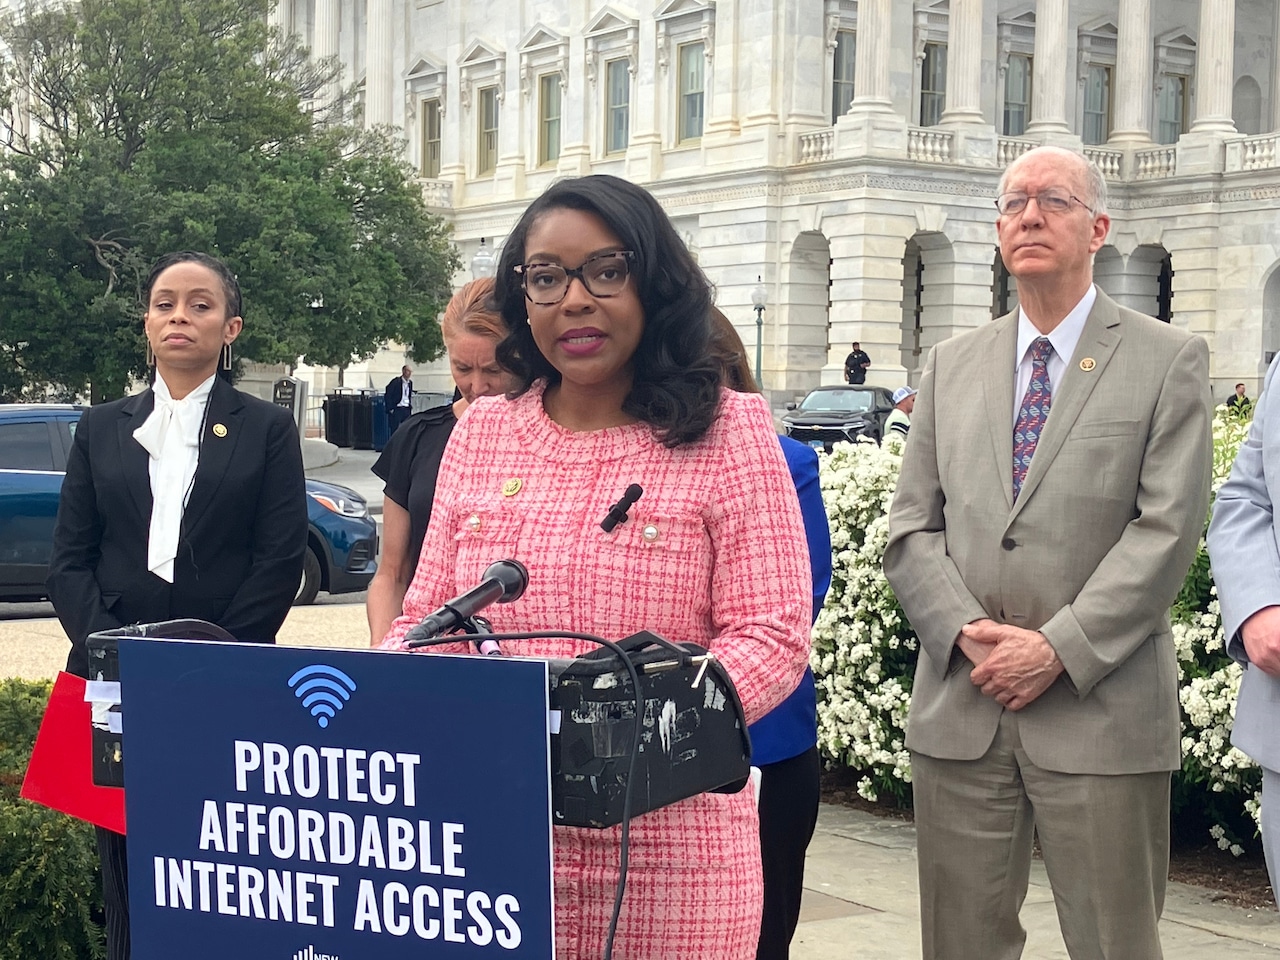 Ohio Congress members seek extension of broadband internet subsidies for consumers [Video]